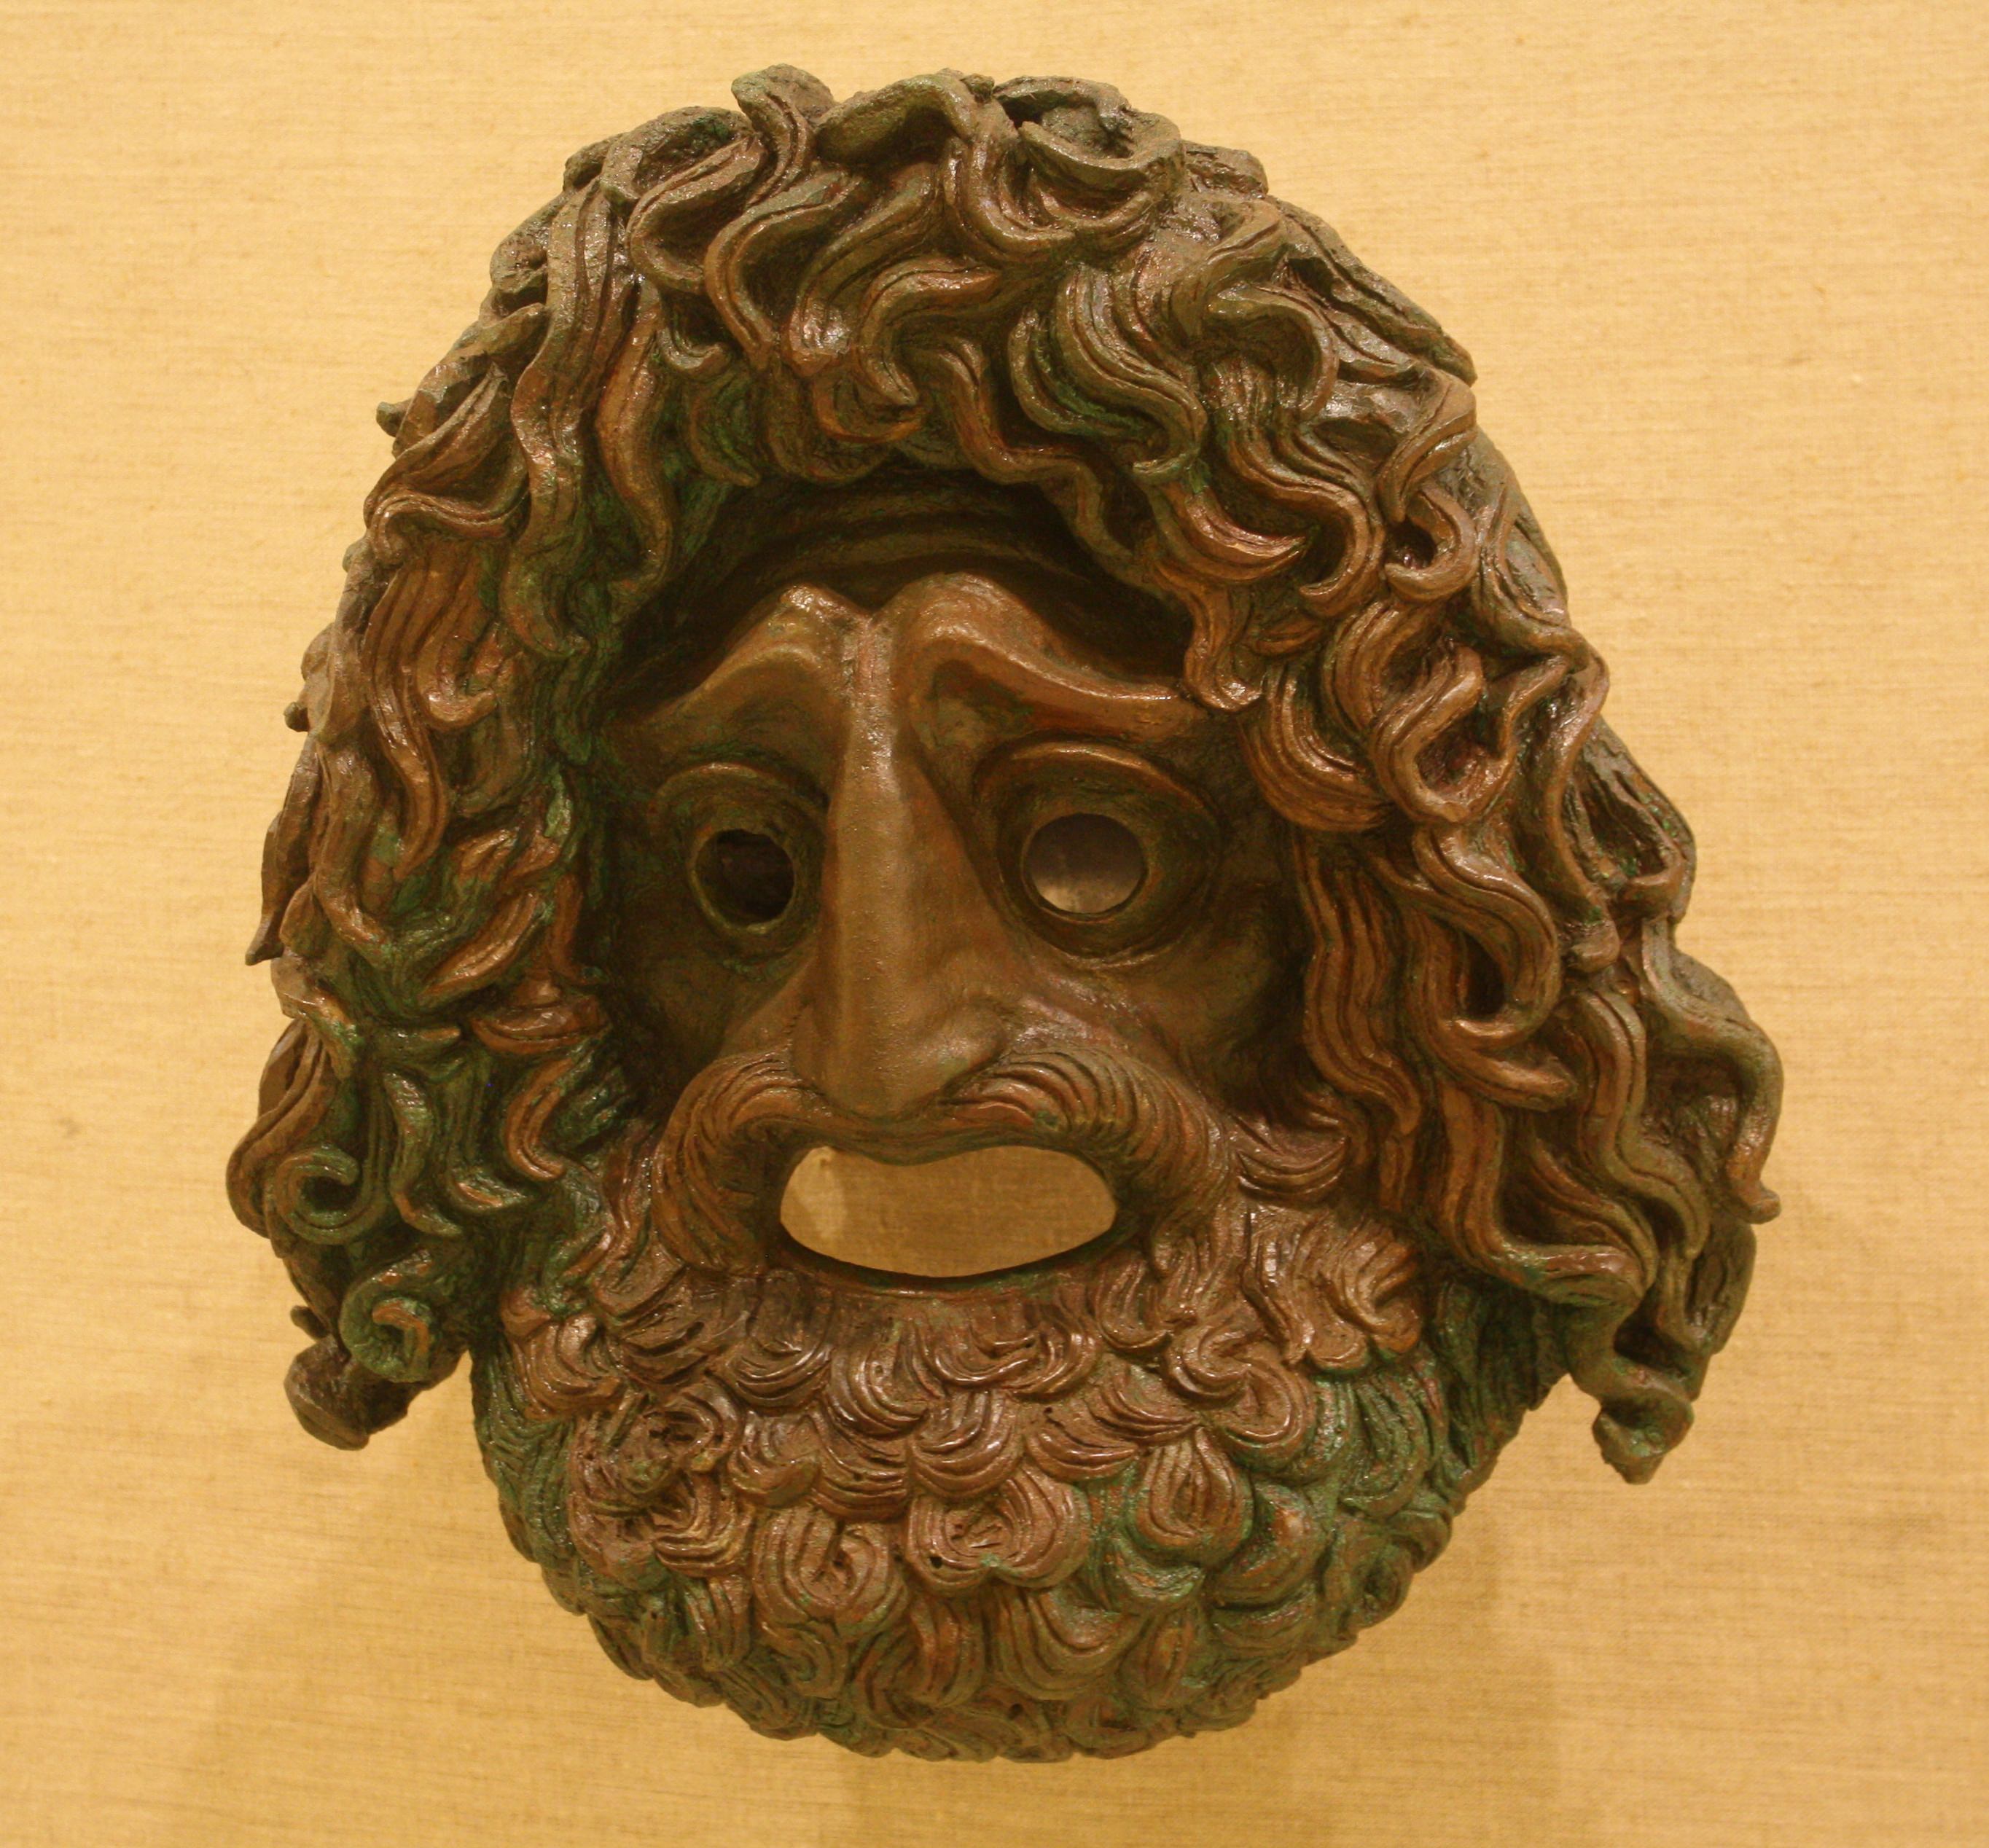 Greek Tragedy Theatre Mask (Illustration) - World History Encyclopedia